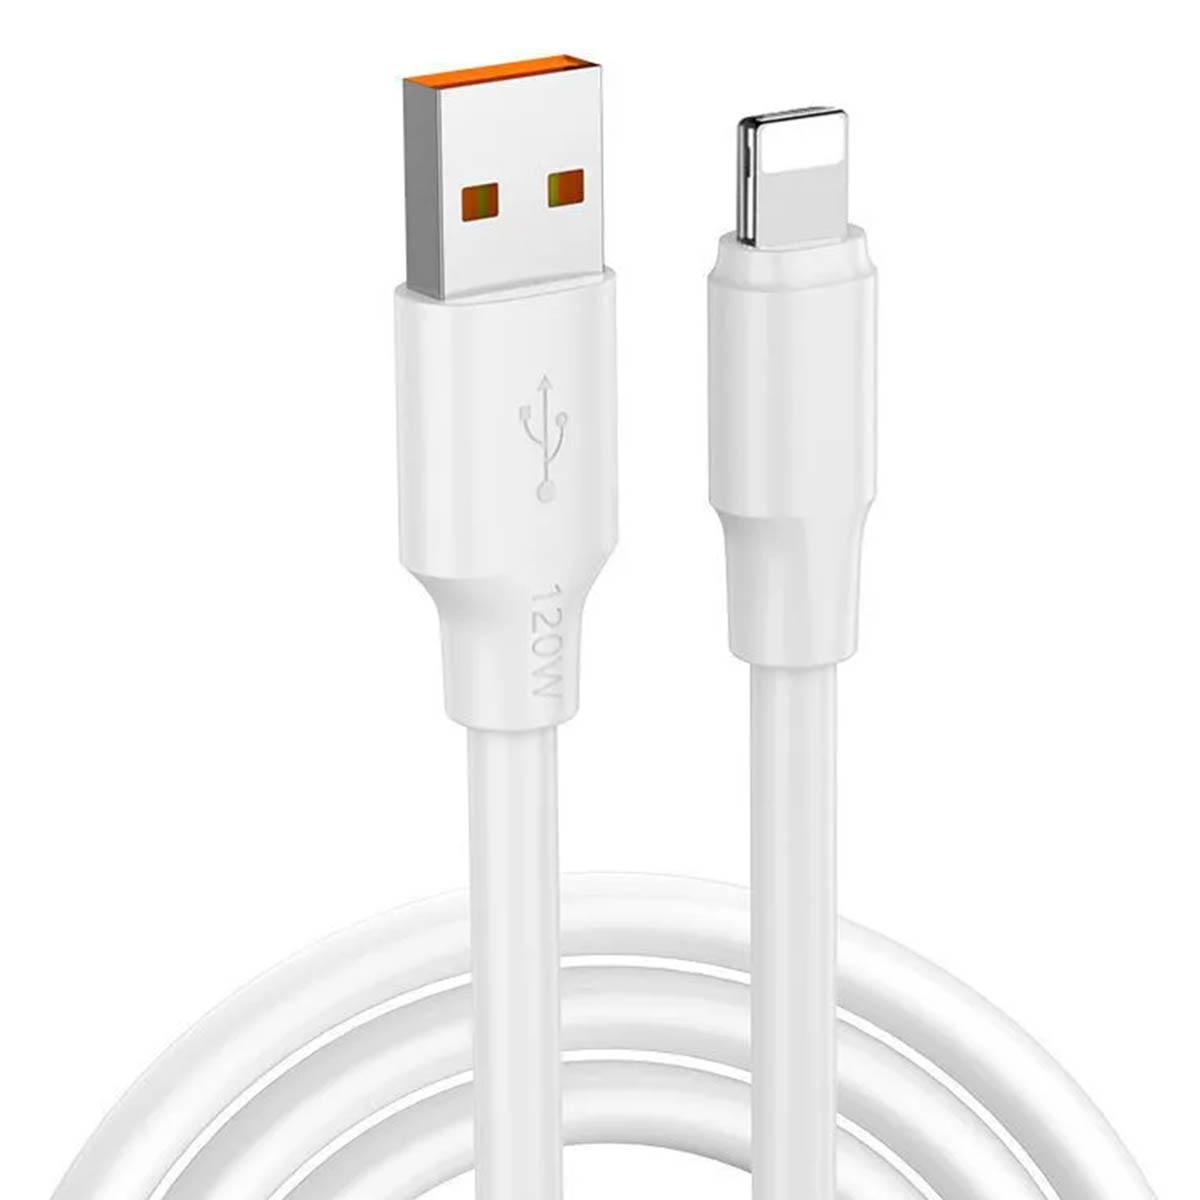 USB Дата кабель MRM MR56i, Lightning 8 pin, силикон, длина 1 метр, 120W, 6.0 A, цвет белый